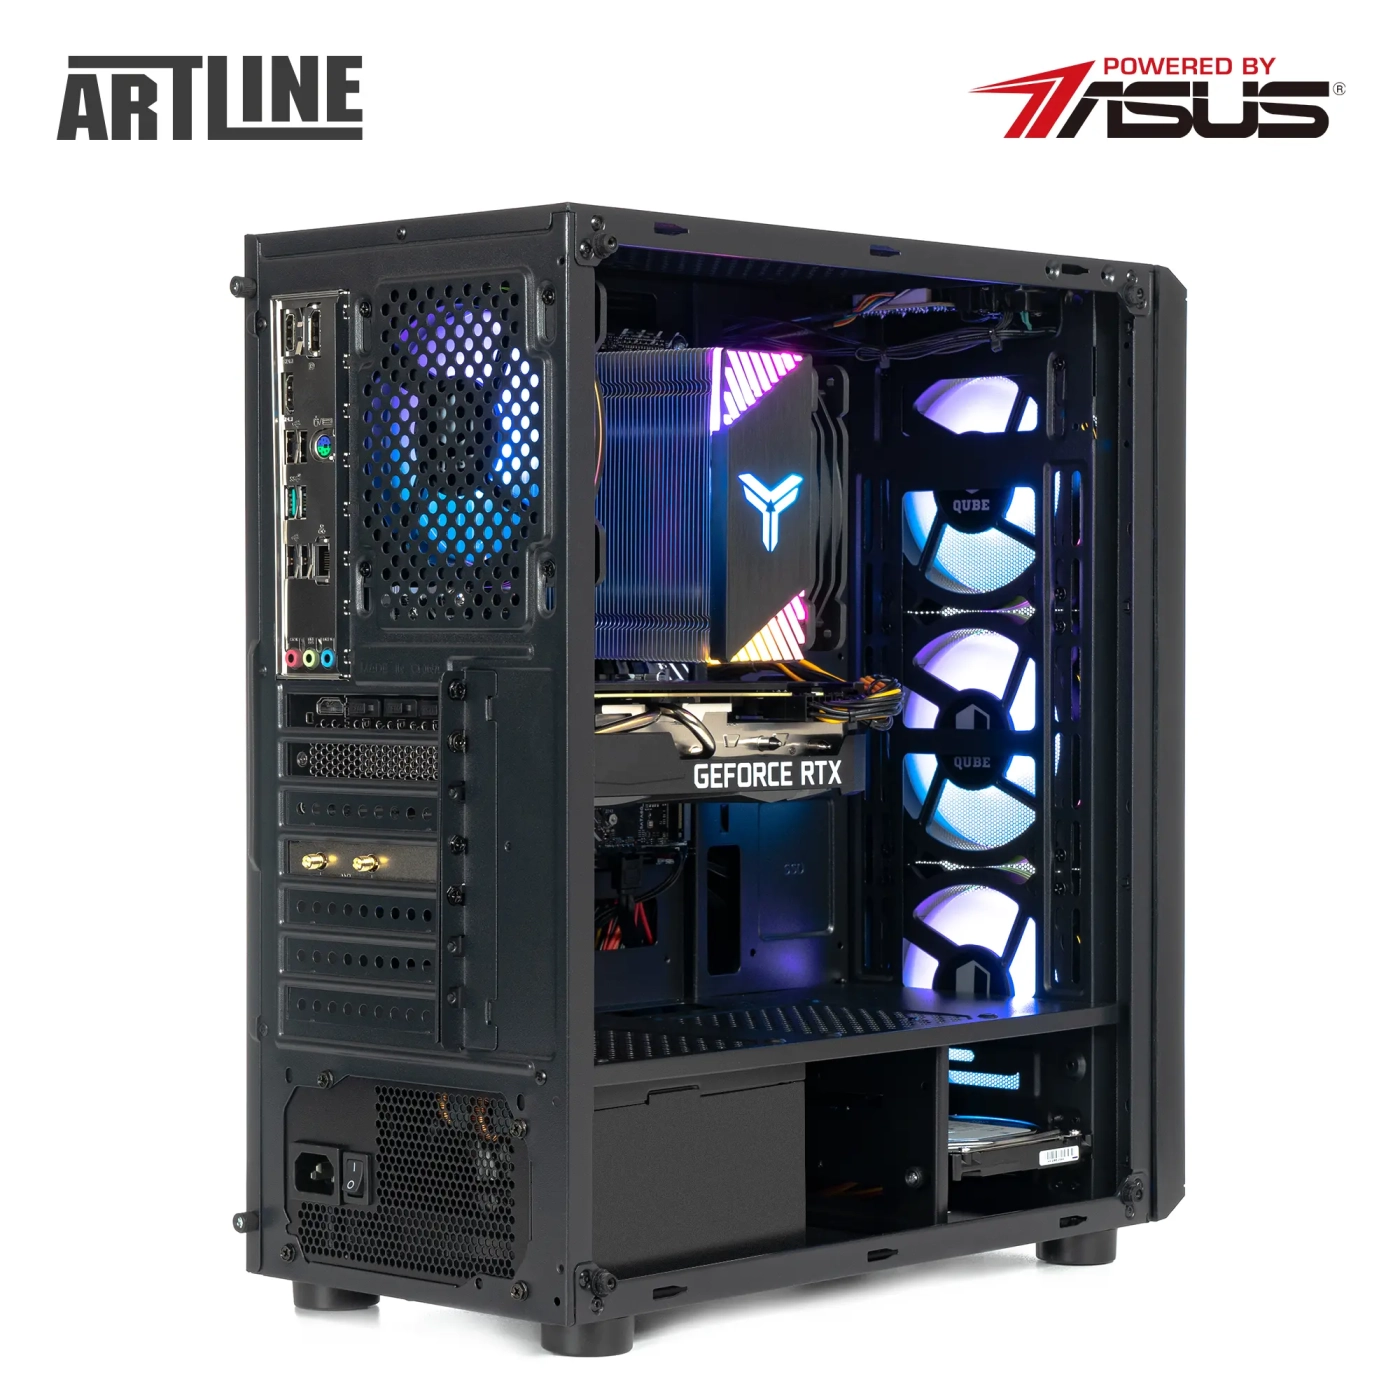 Купить Компьютер ARTLINE Gaming X55 (X55v53) - фото 11